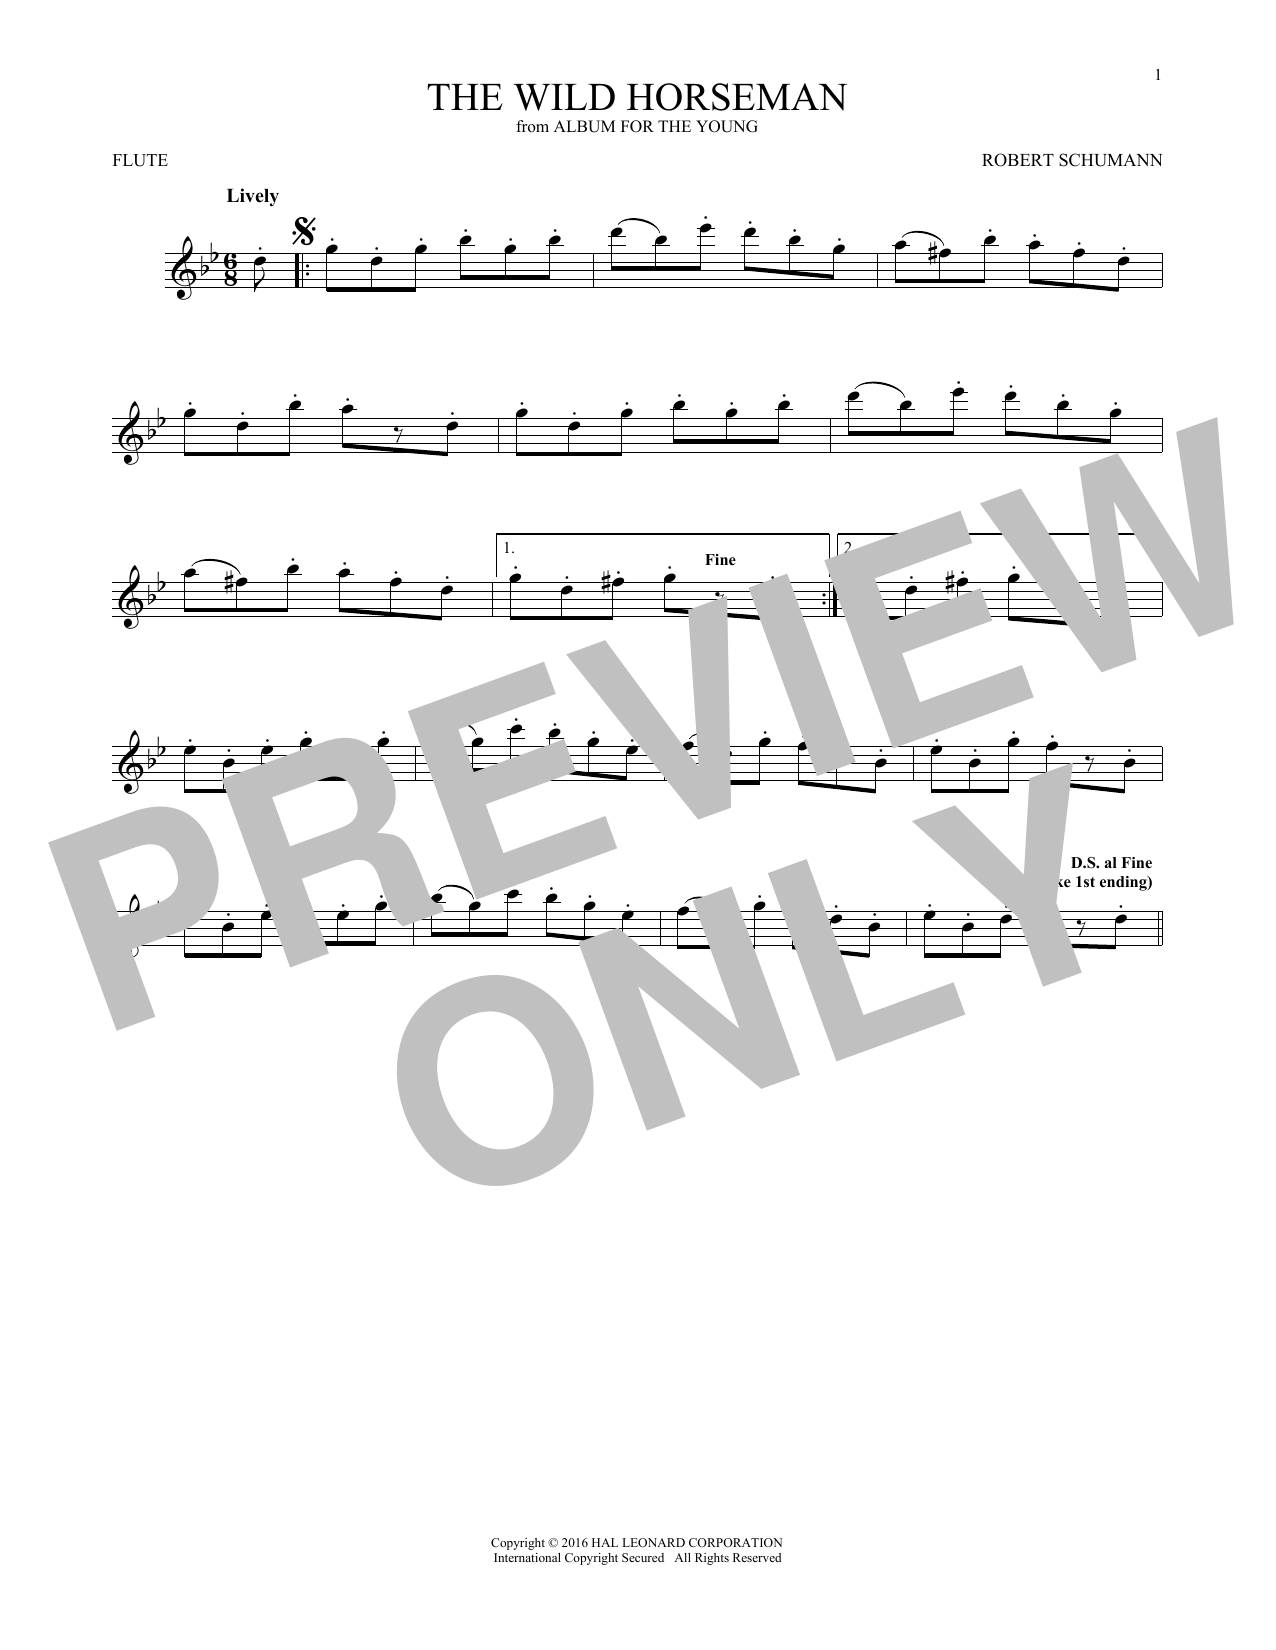 Robert Schumann The Wild Horseman (Wilder Reiter), Op. 68, No. 8 Sheet Music Notes & Chords for Trombone - Download or Print PDF